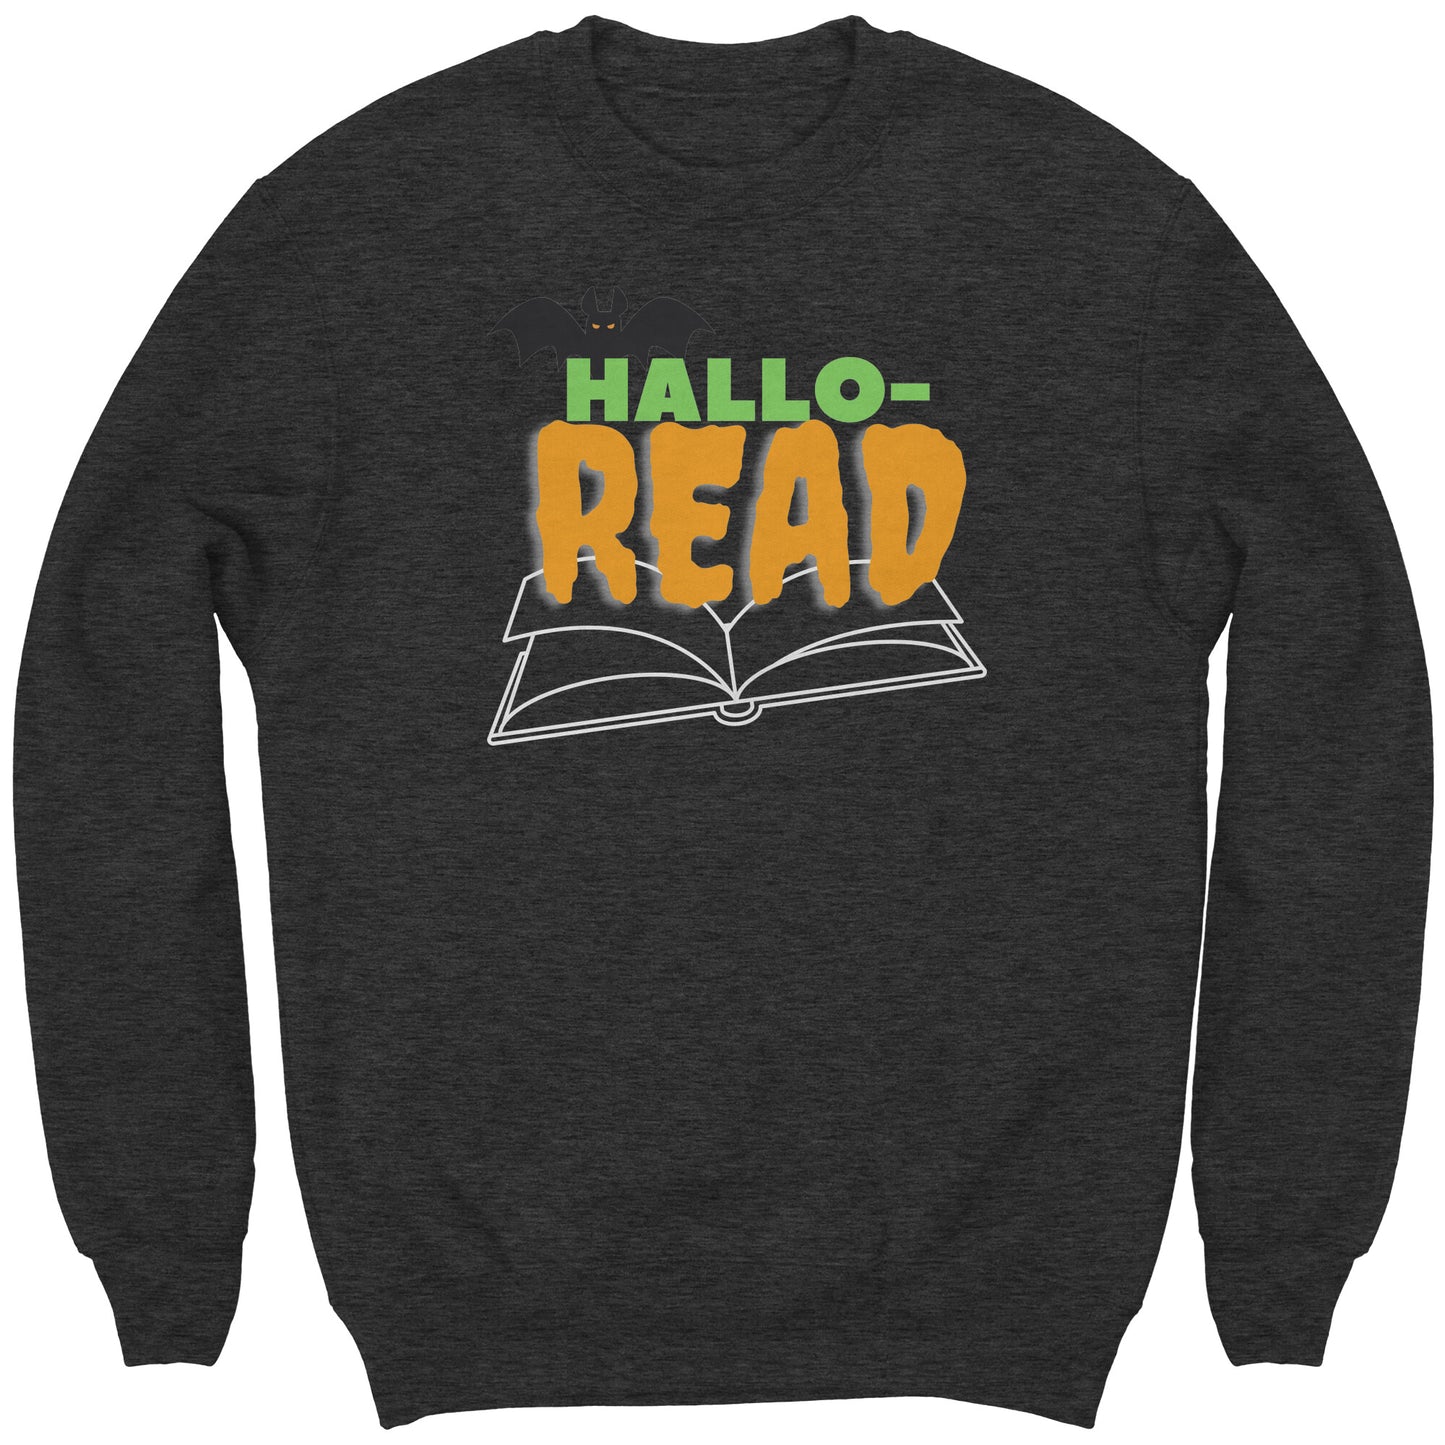 Hallo-read Crewneck Youth Sweatshirt